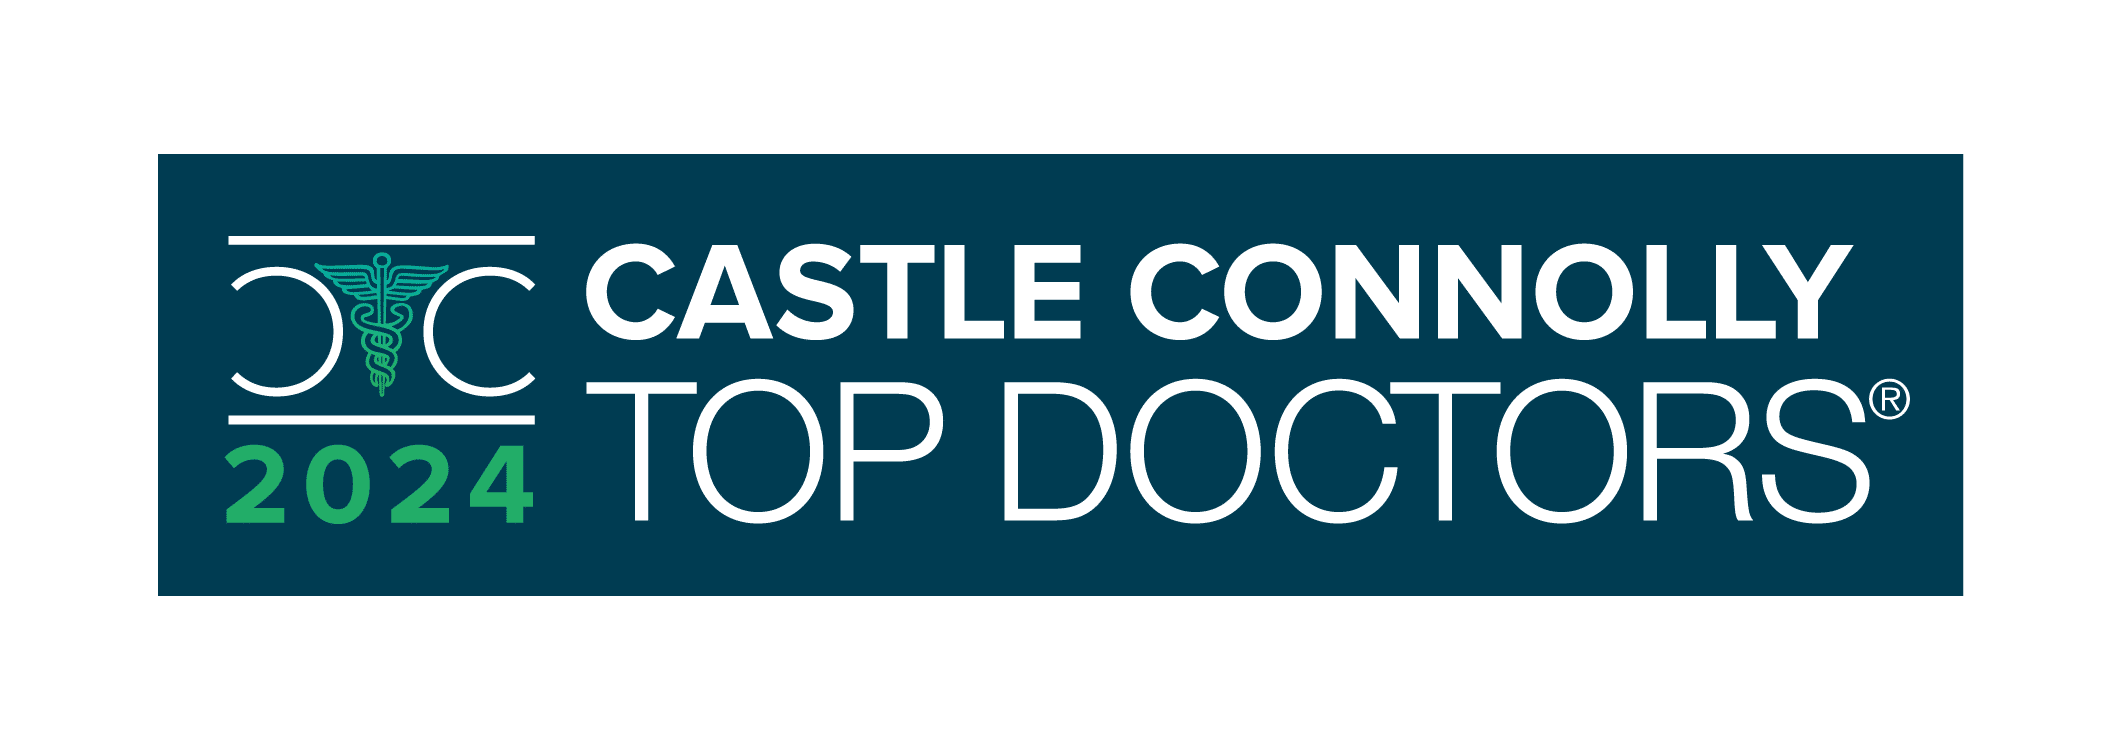 CC Top Doctors Logo horizontal